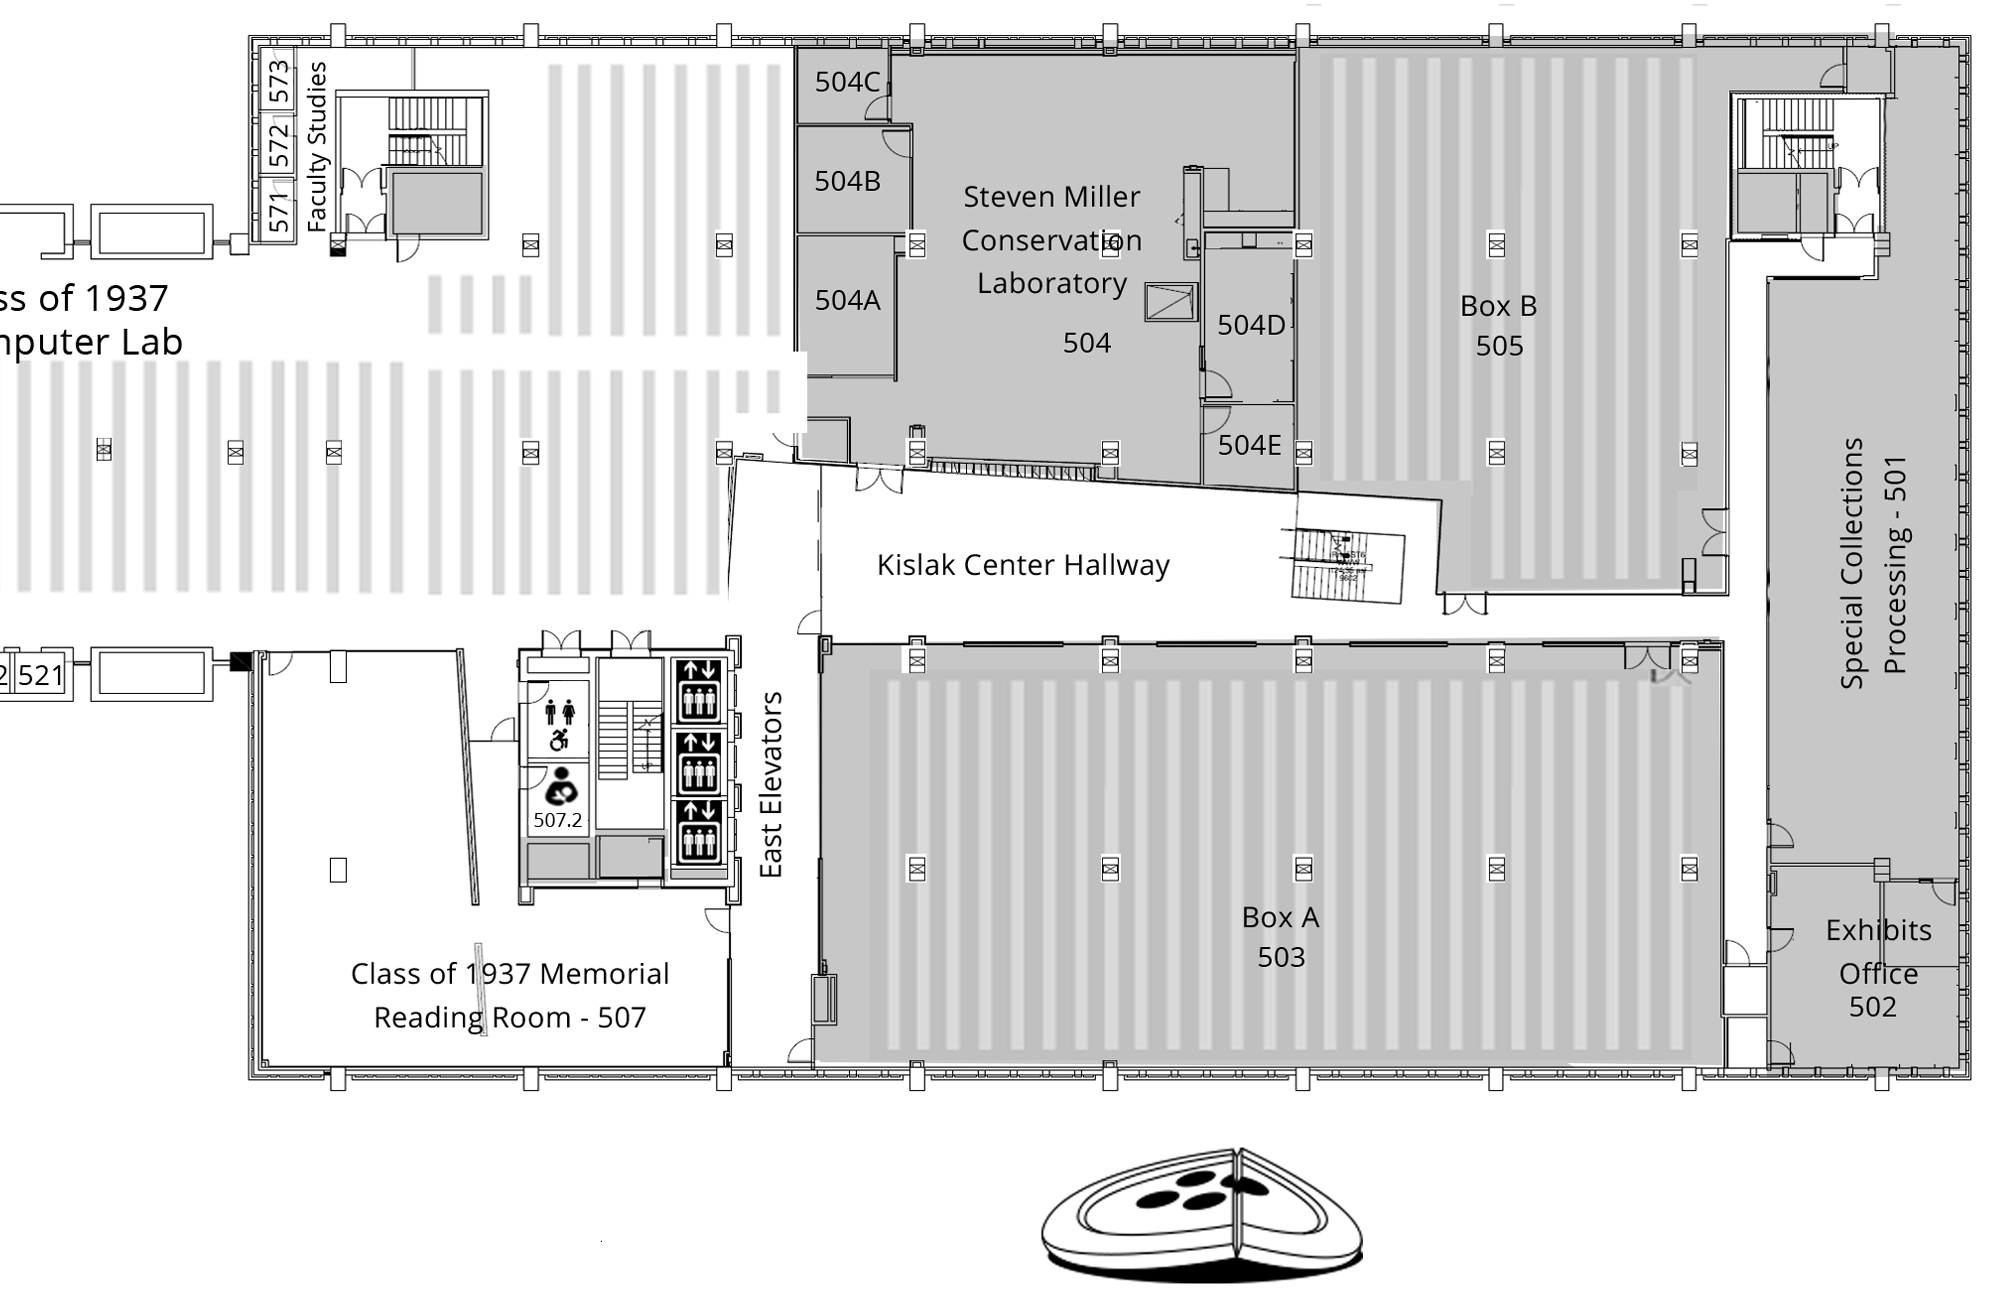 fifth floor plan, east end, Van Pelt-Dietrich Library Center. Full description is linked below.